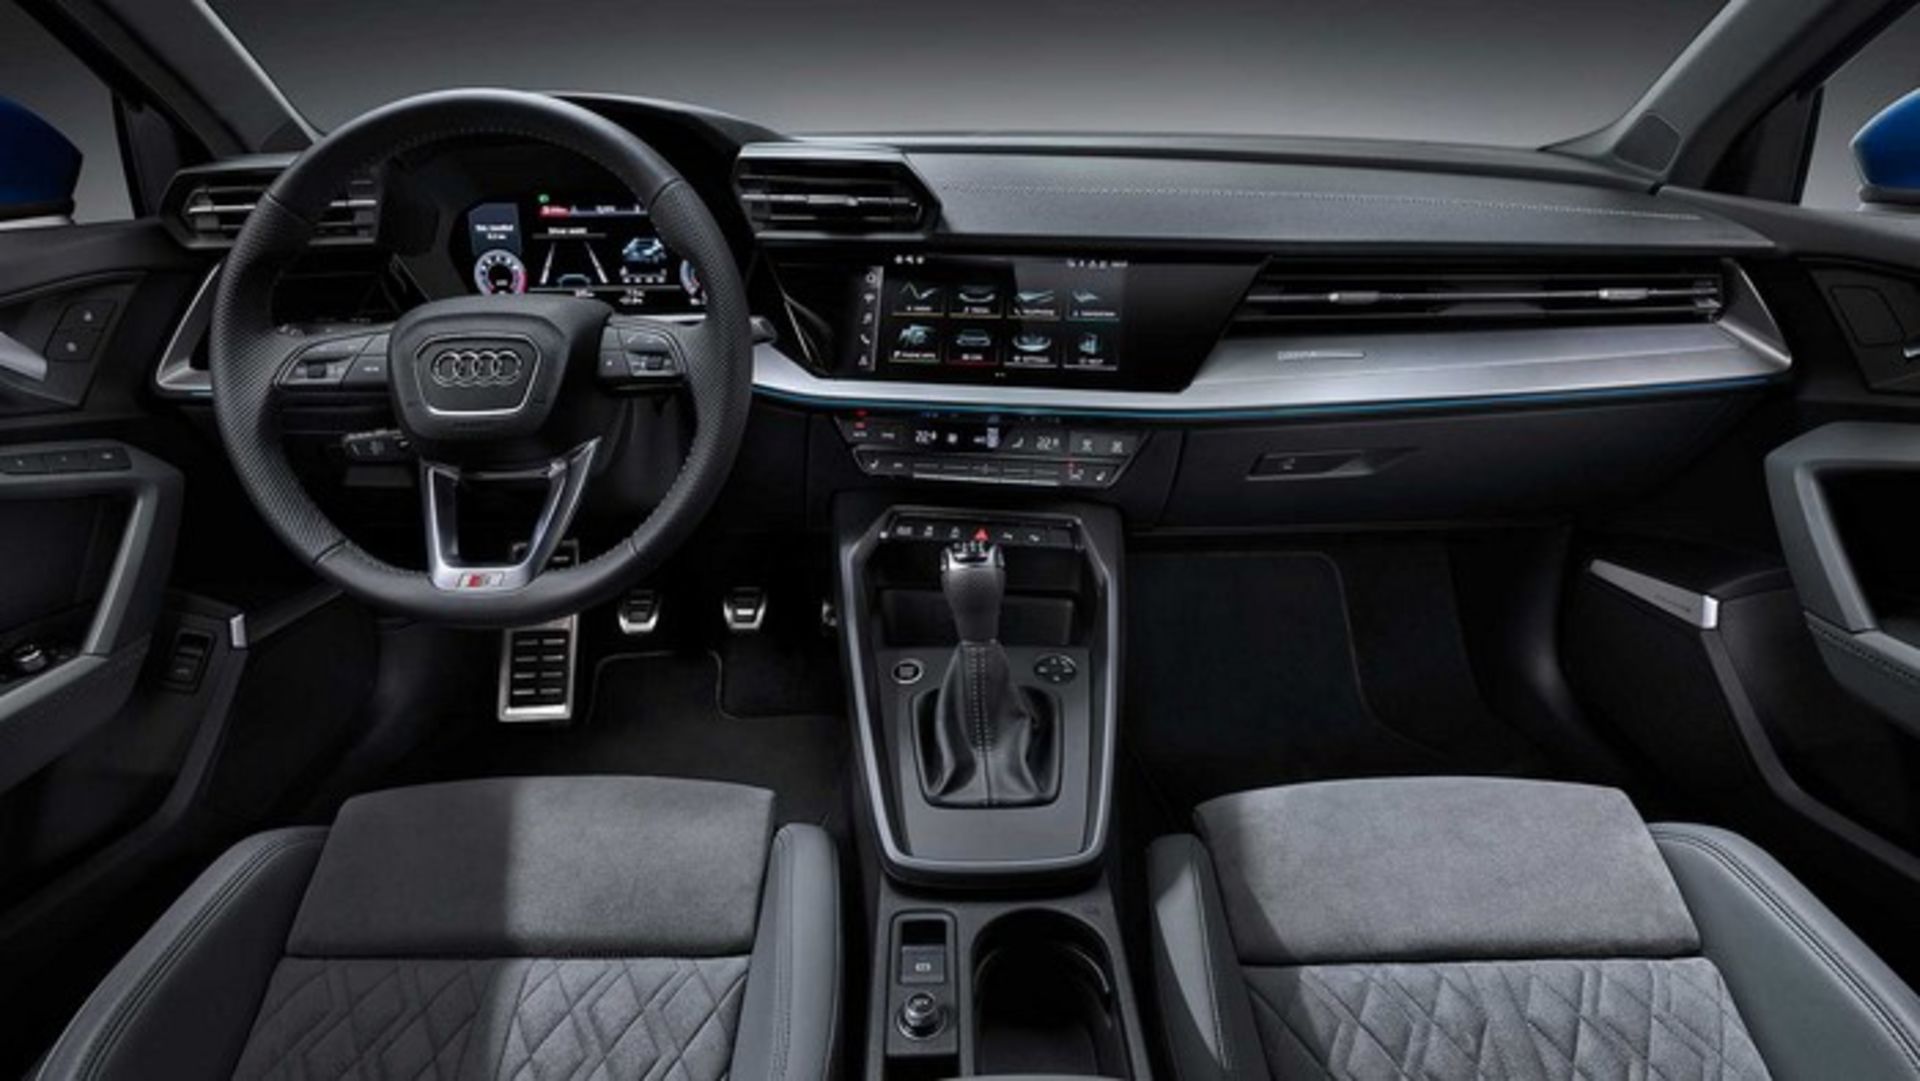 Audi A3 Sportback